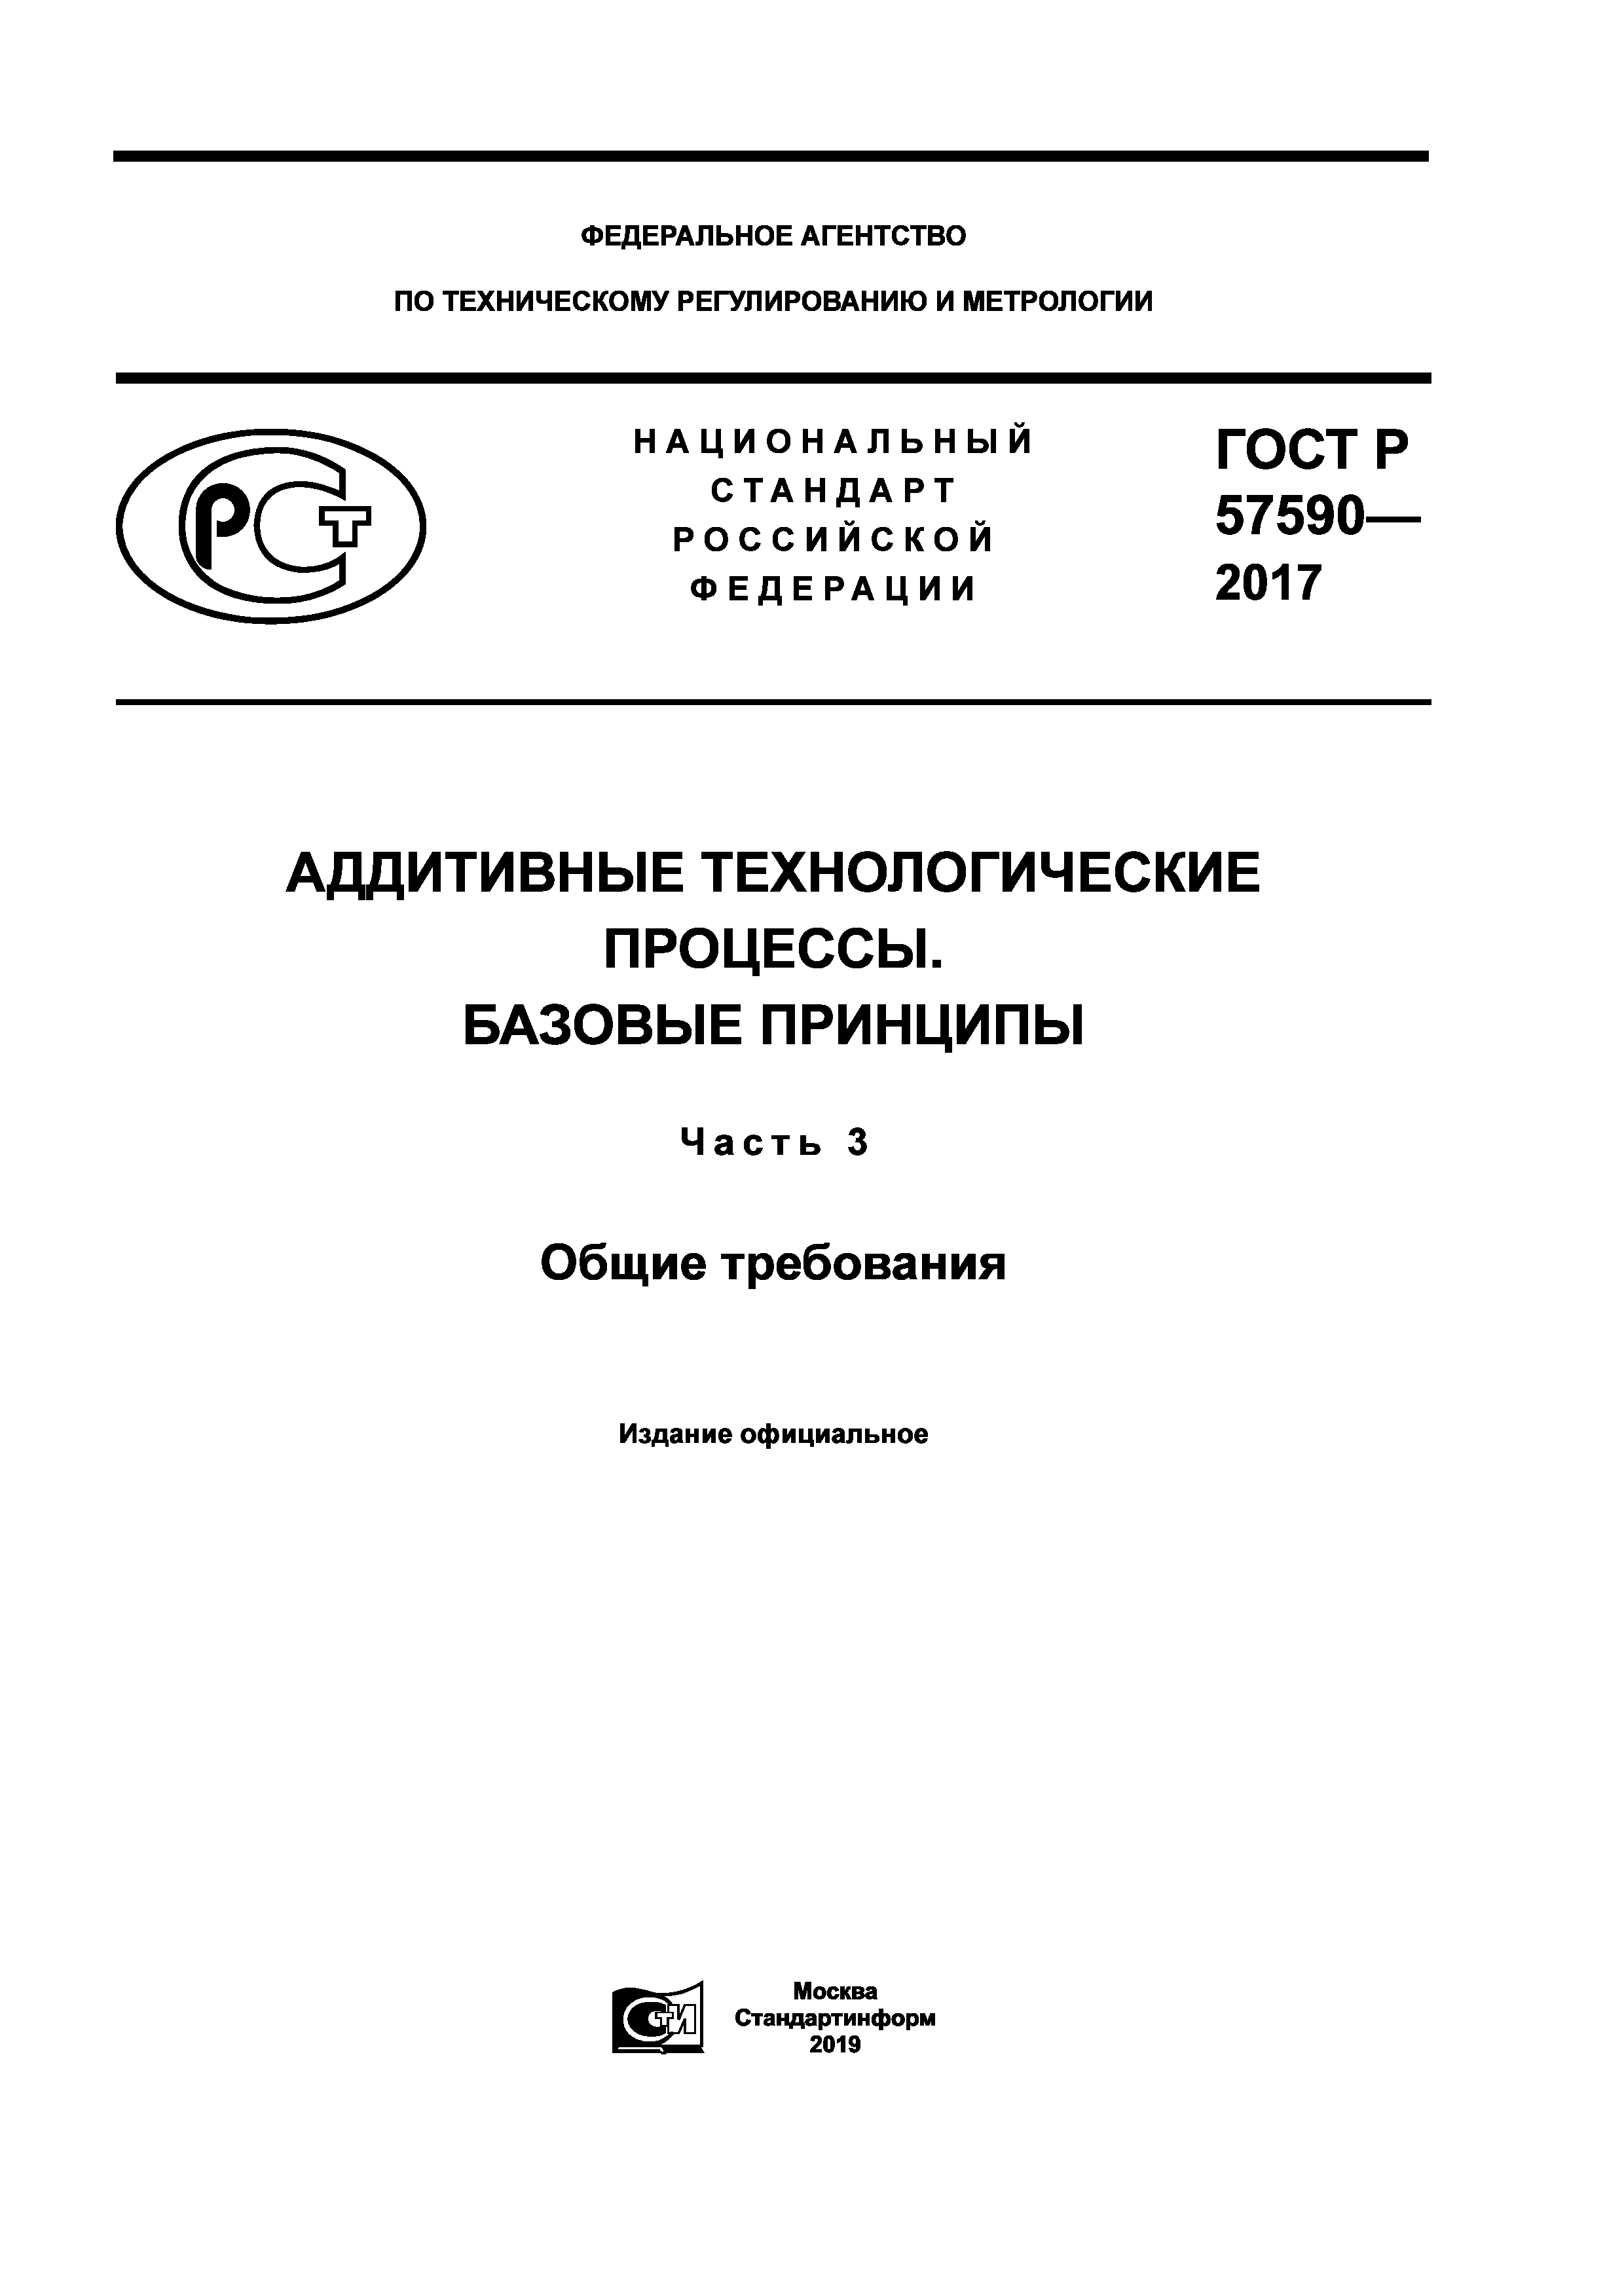 ГОСТ Р 57590-2017